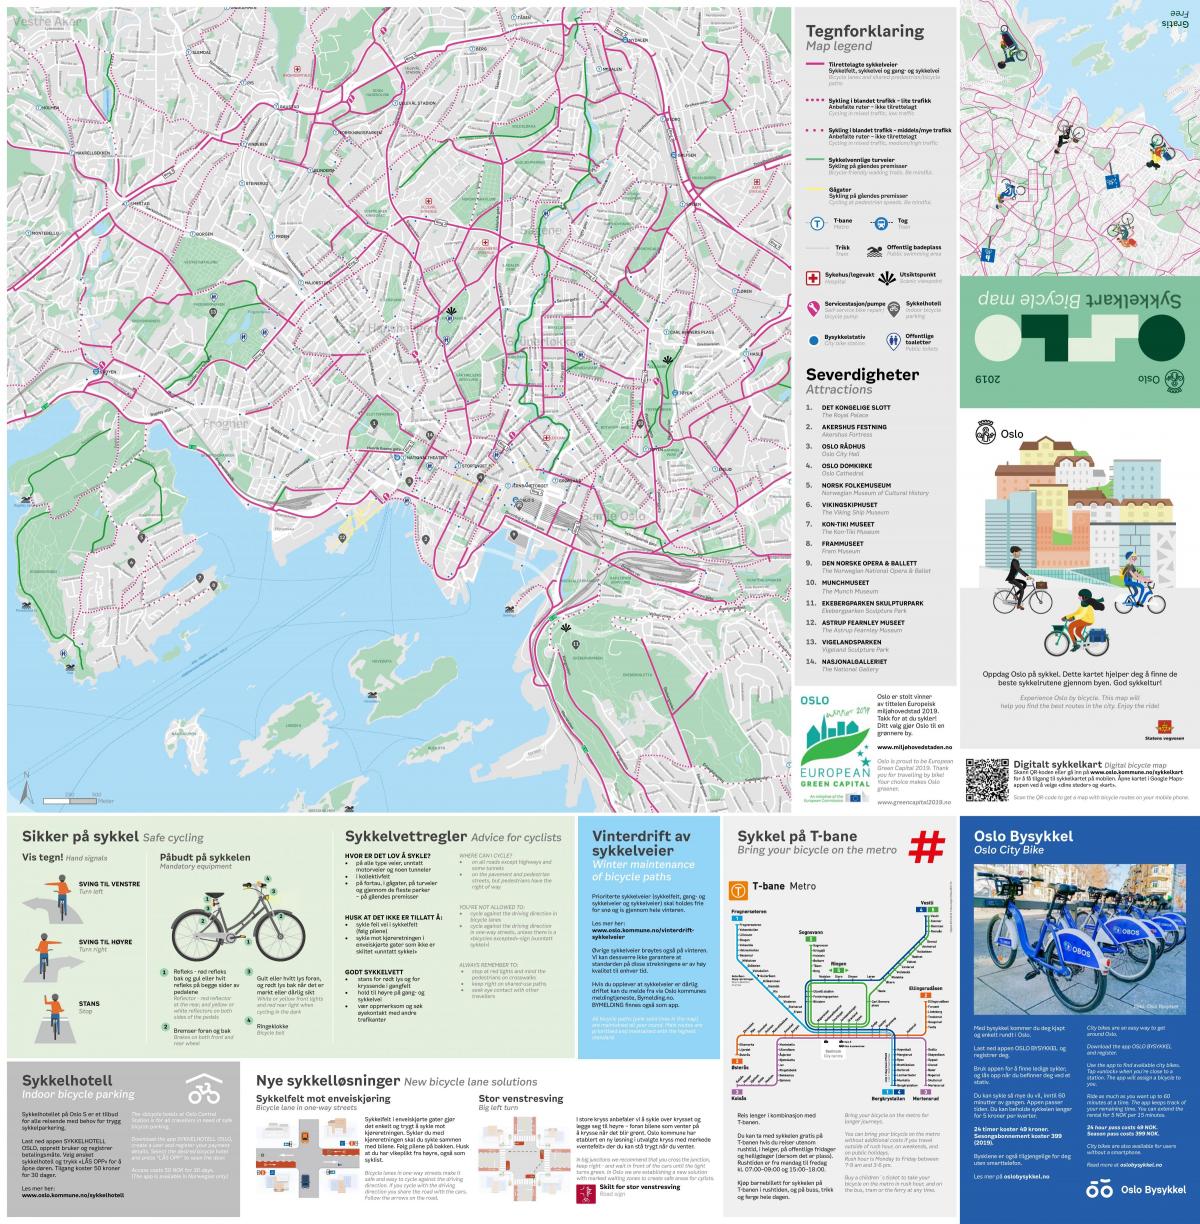 Oslo bike lane map